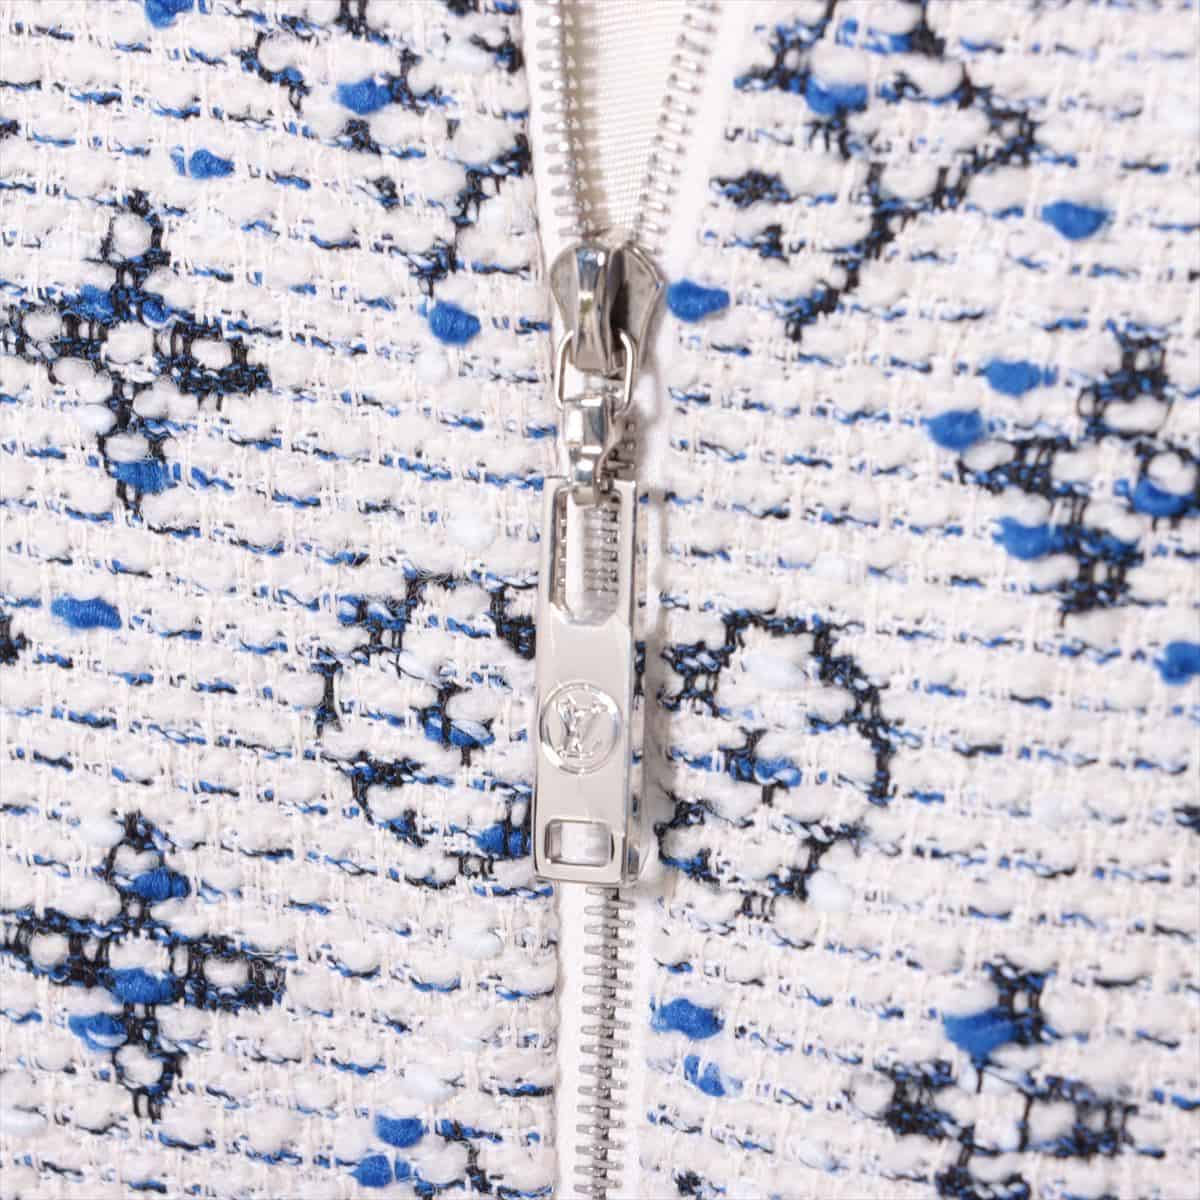 Louis Vuitton Monogram 19SS Tweed Sleeveless dress 38 Ladies' Blue x white